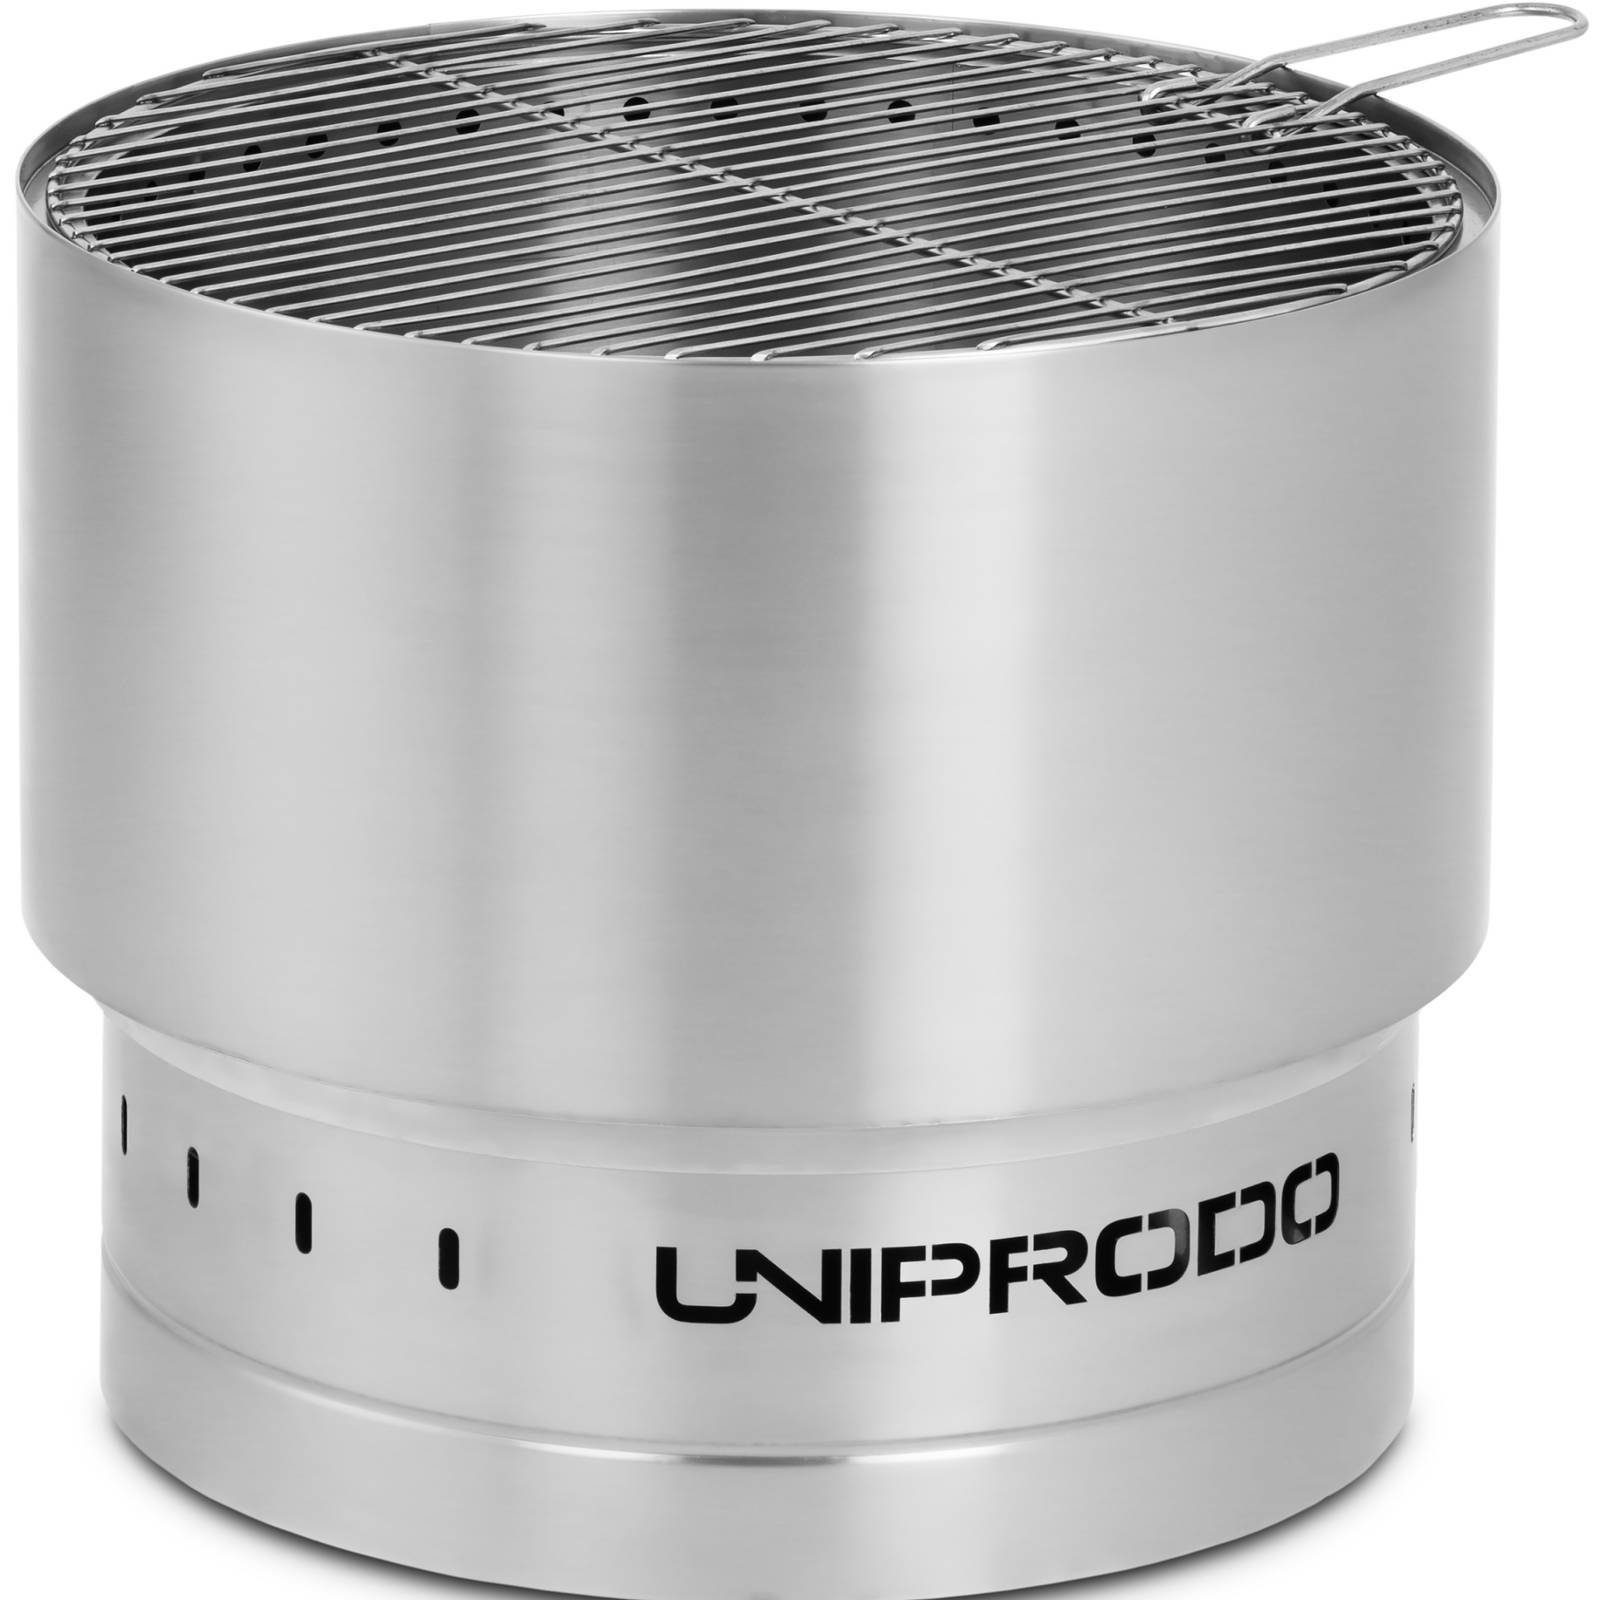 Uniprodo Feuerschale Feuerkorb Ø55x48 cm mit Grillrost Edelstahl